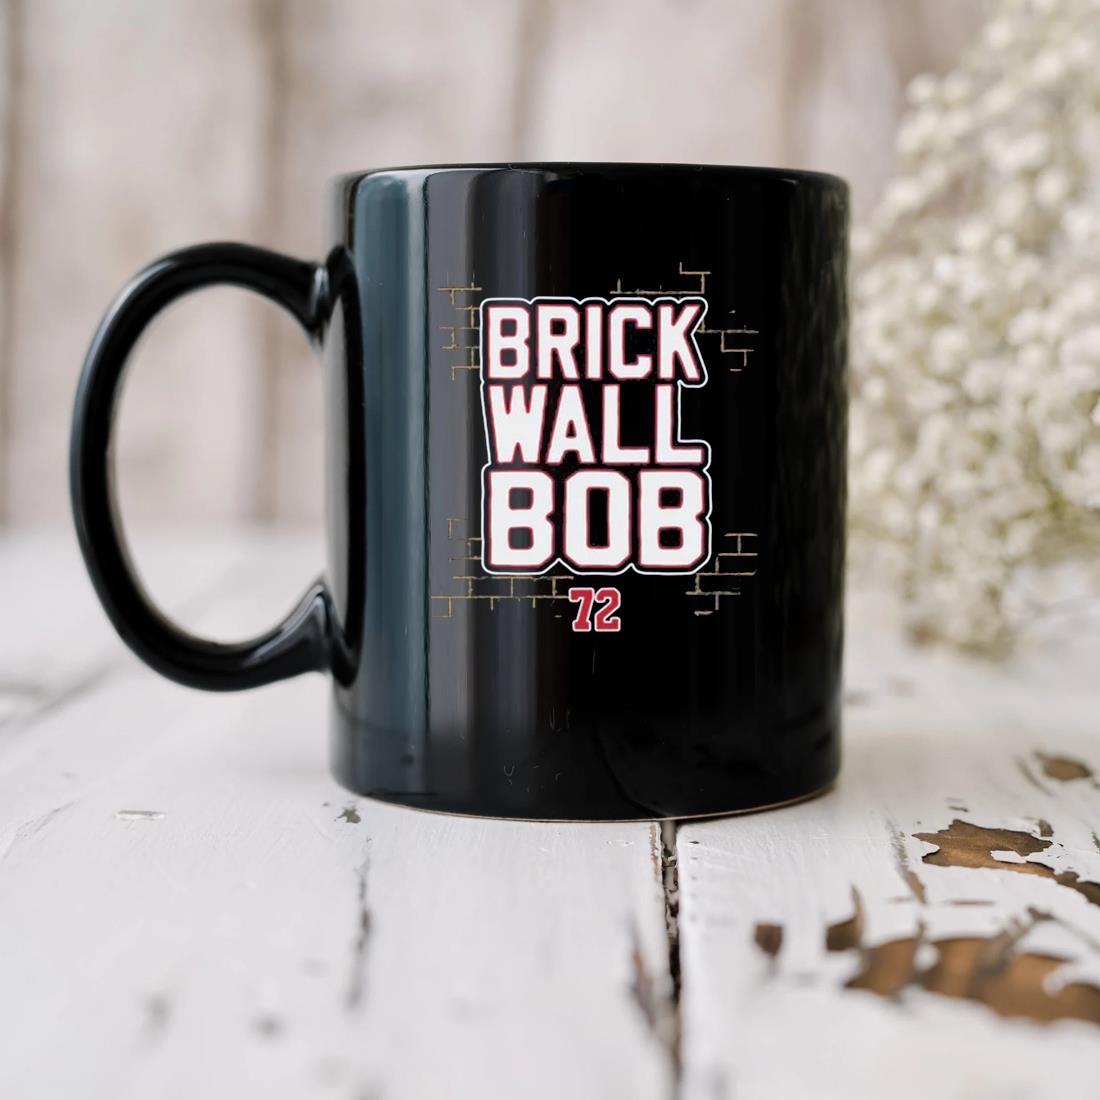 Original Brick Wall Bob 72 Mug biu.jpg